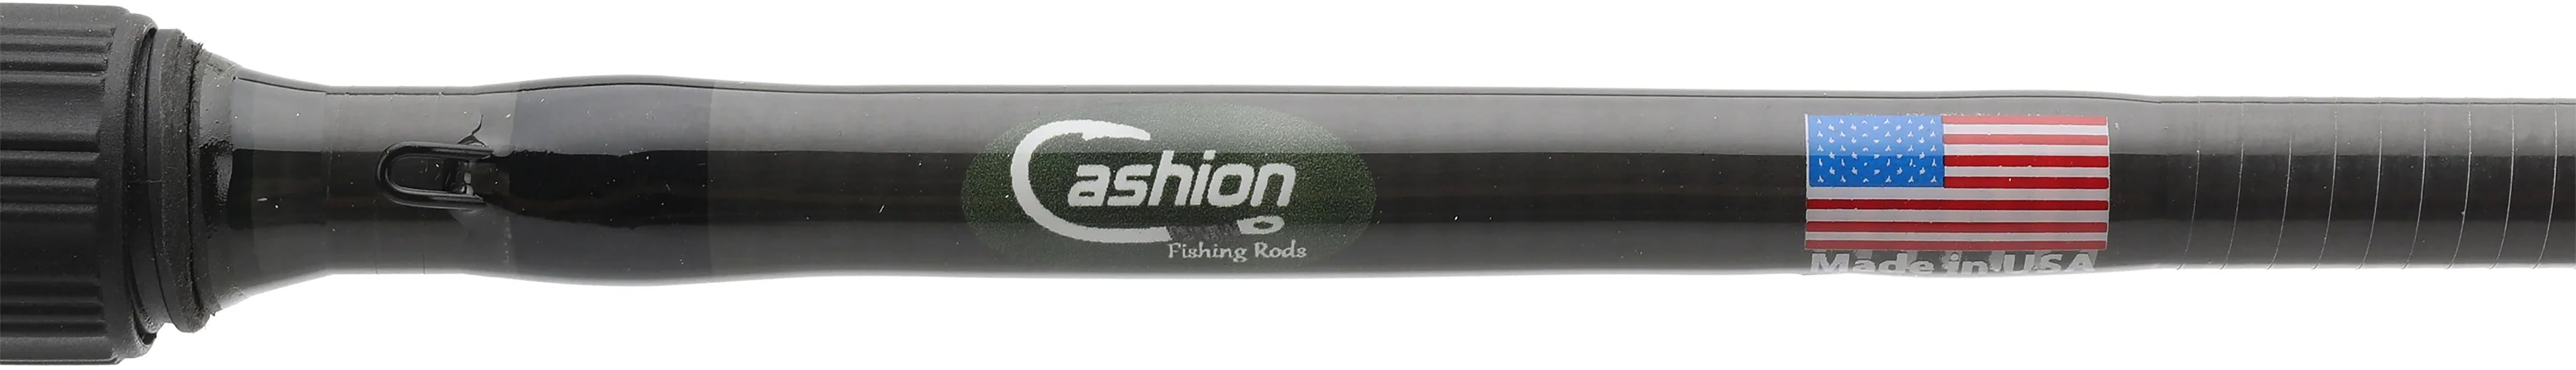 Cashion ICON Series BFS Casting Rods